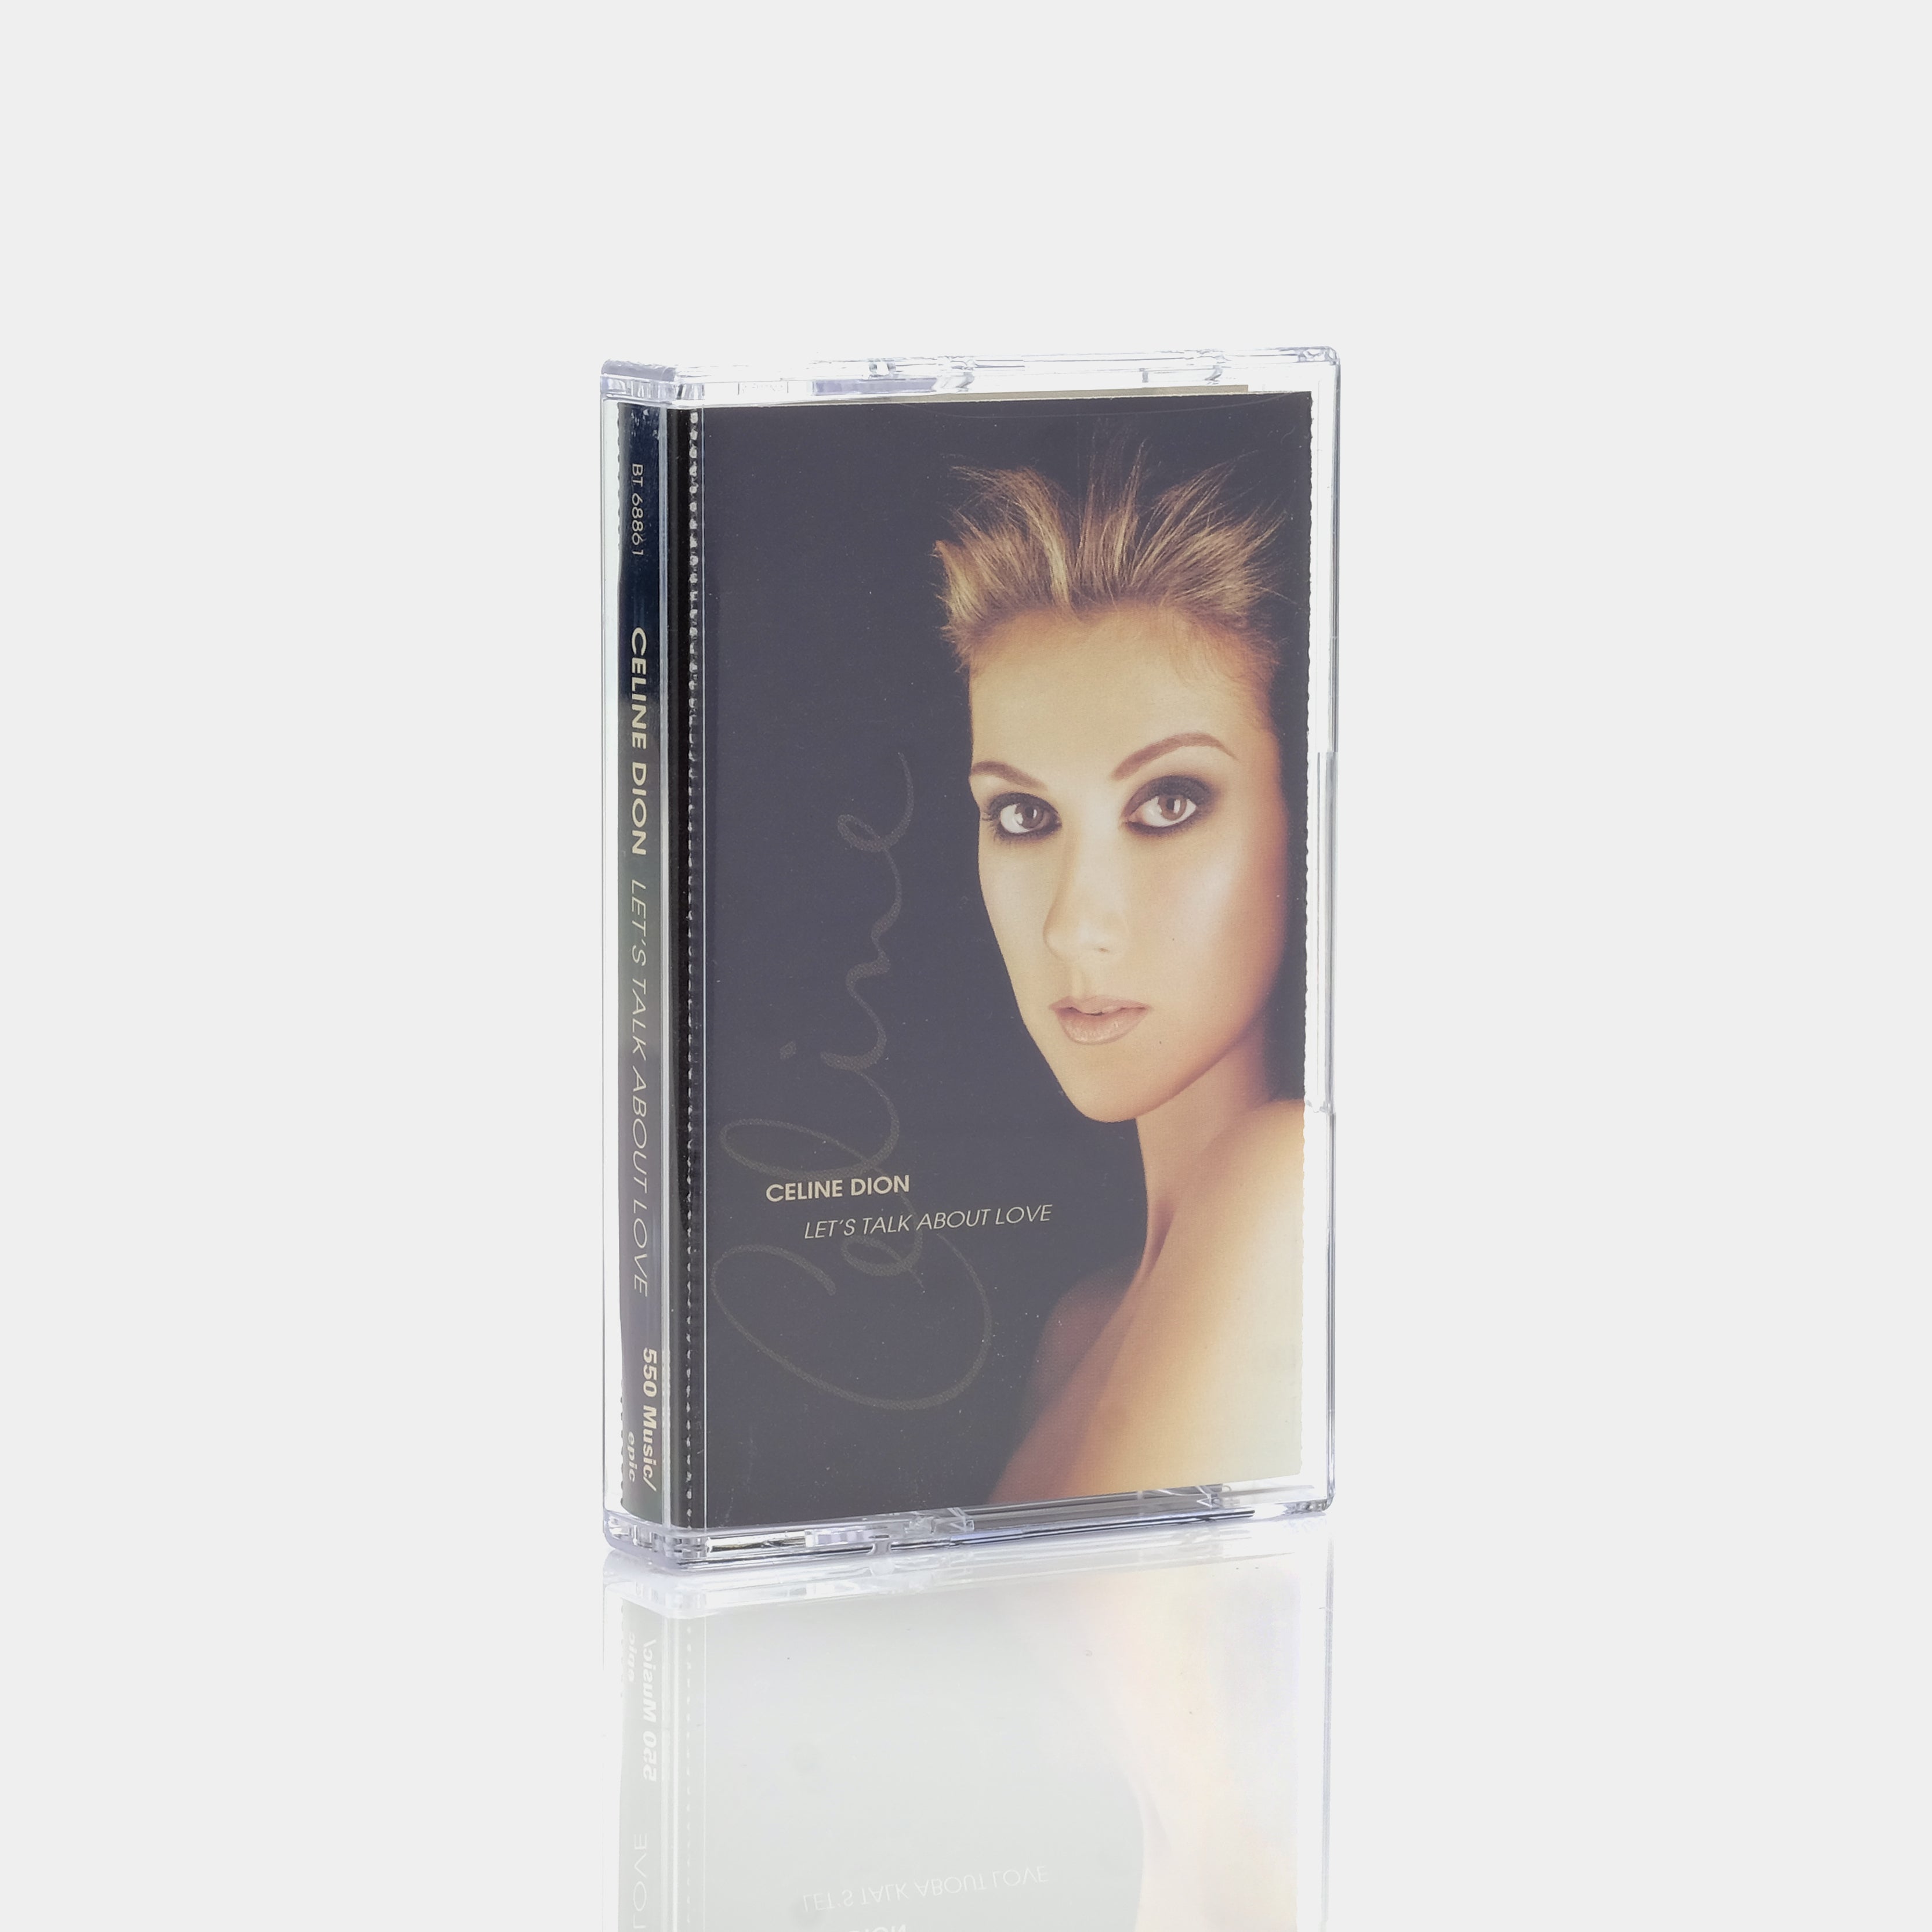 Celine Dion - Let's Talk About Love Cassette Tape